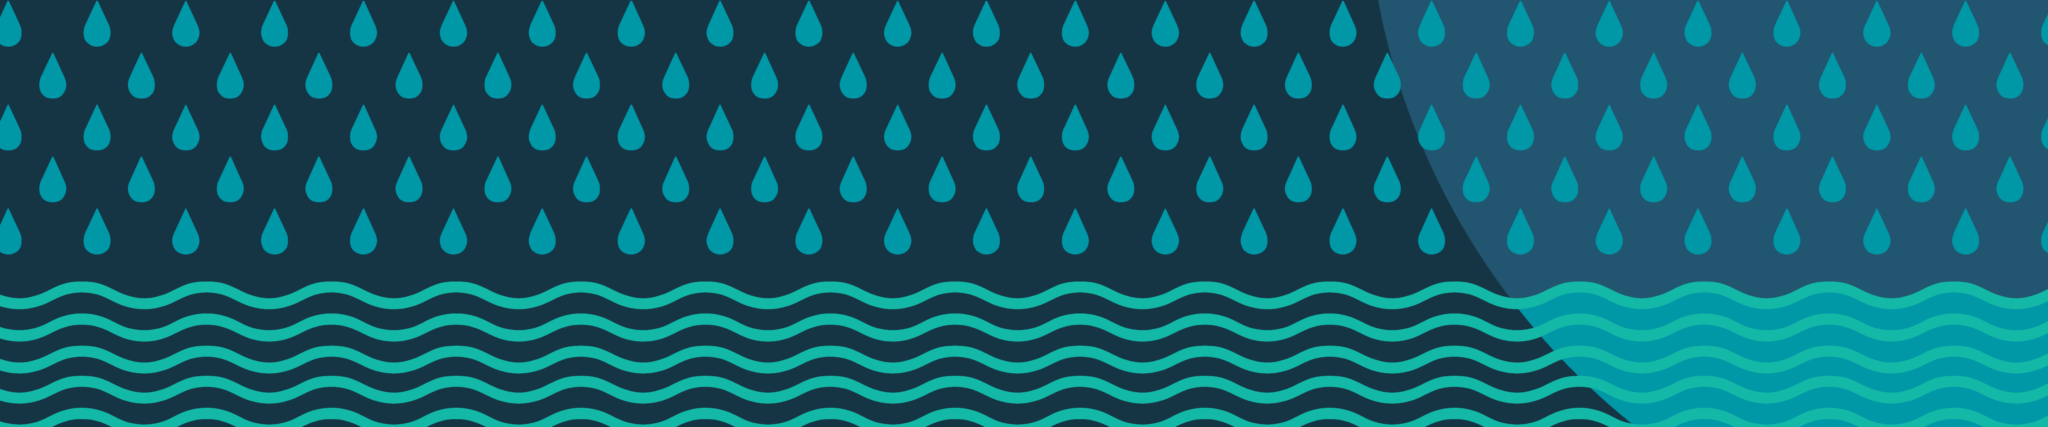 illustration of rain and flooding